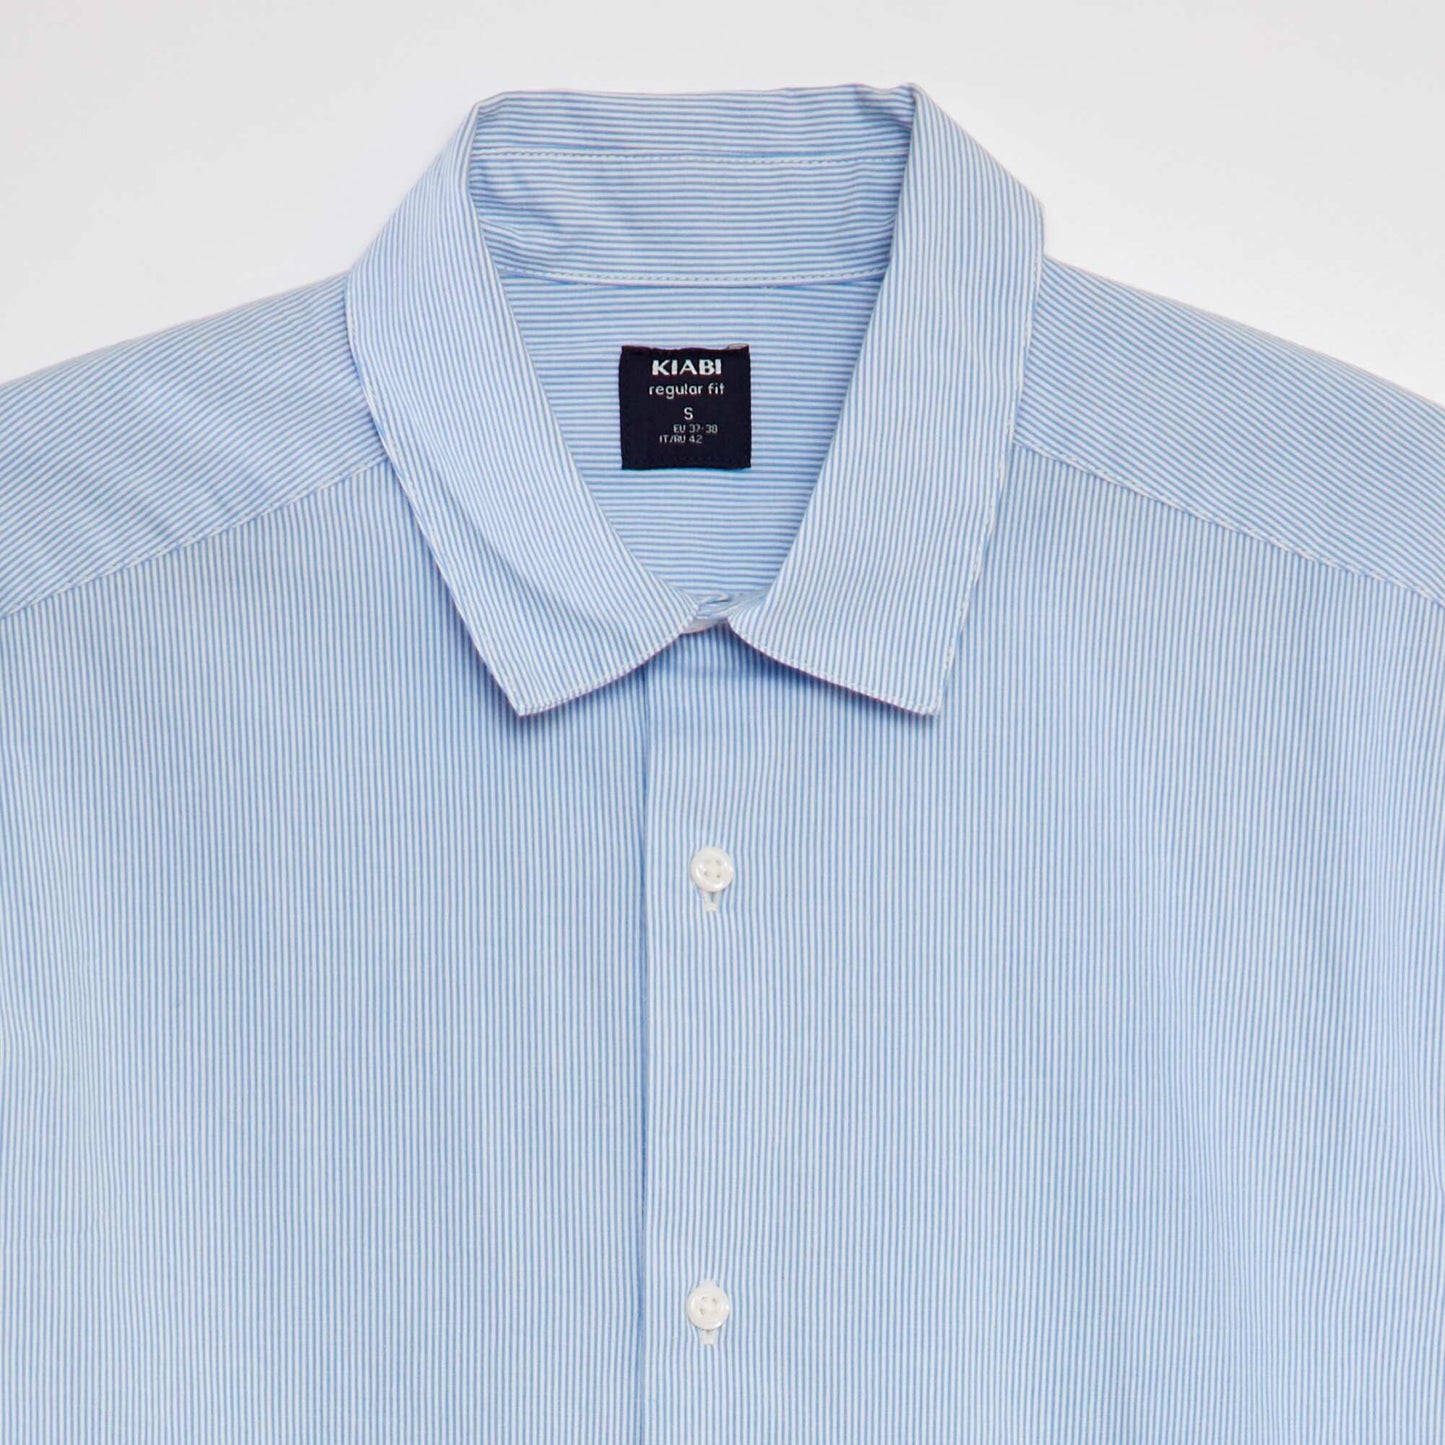 Cotton shirt BLUE